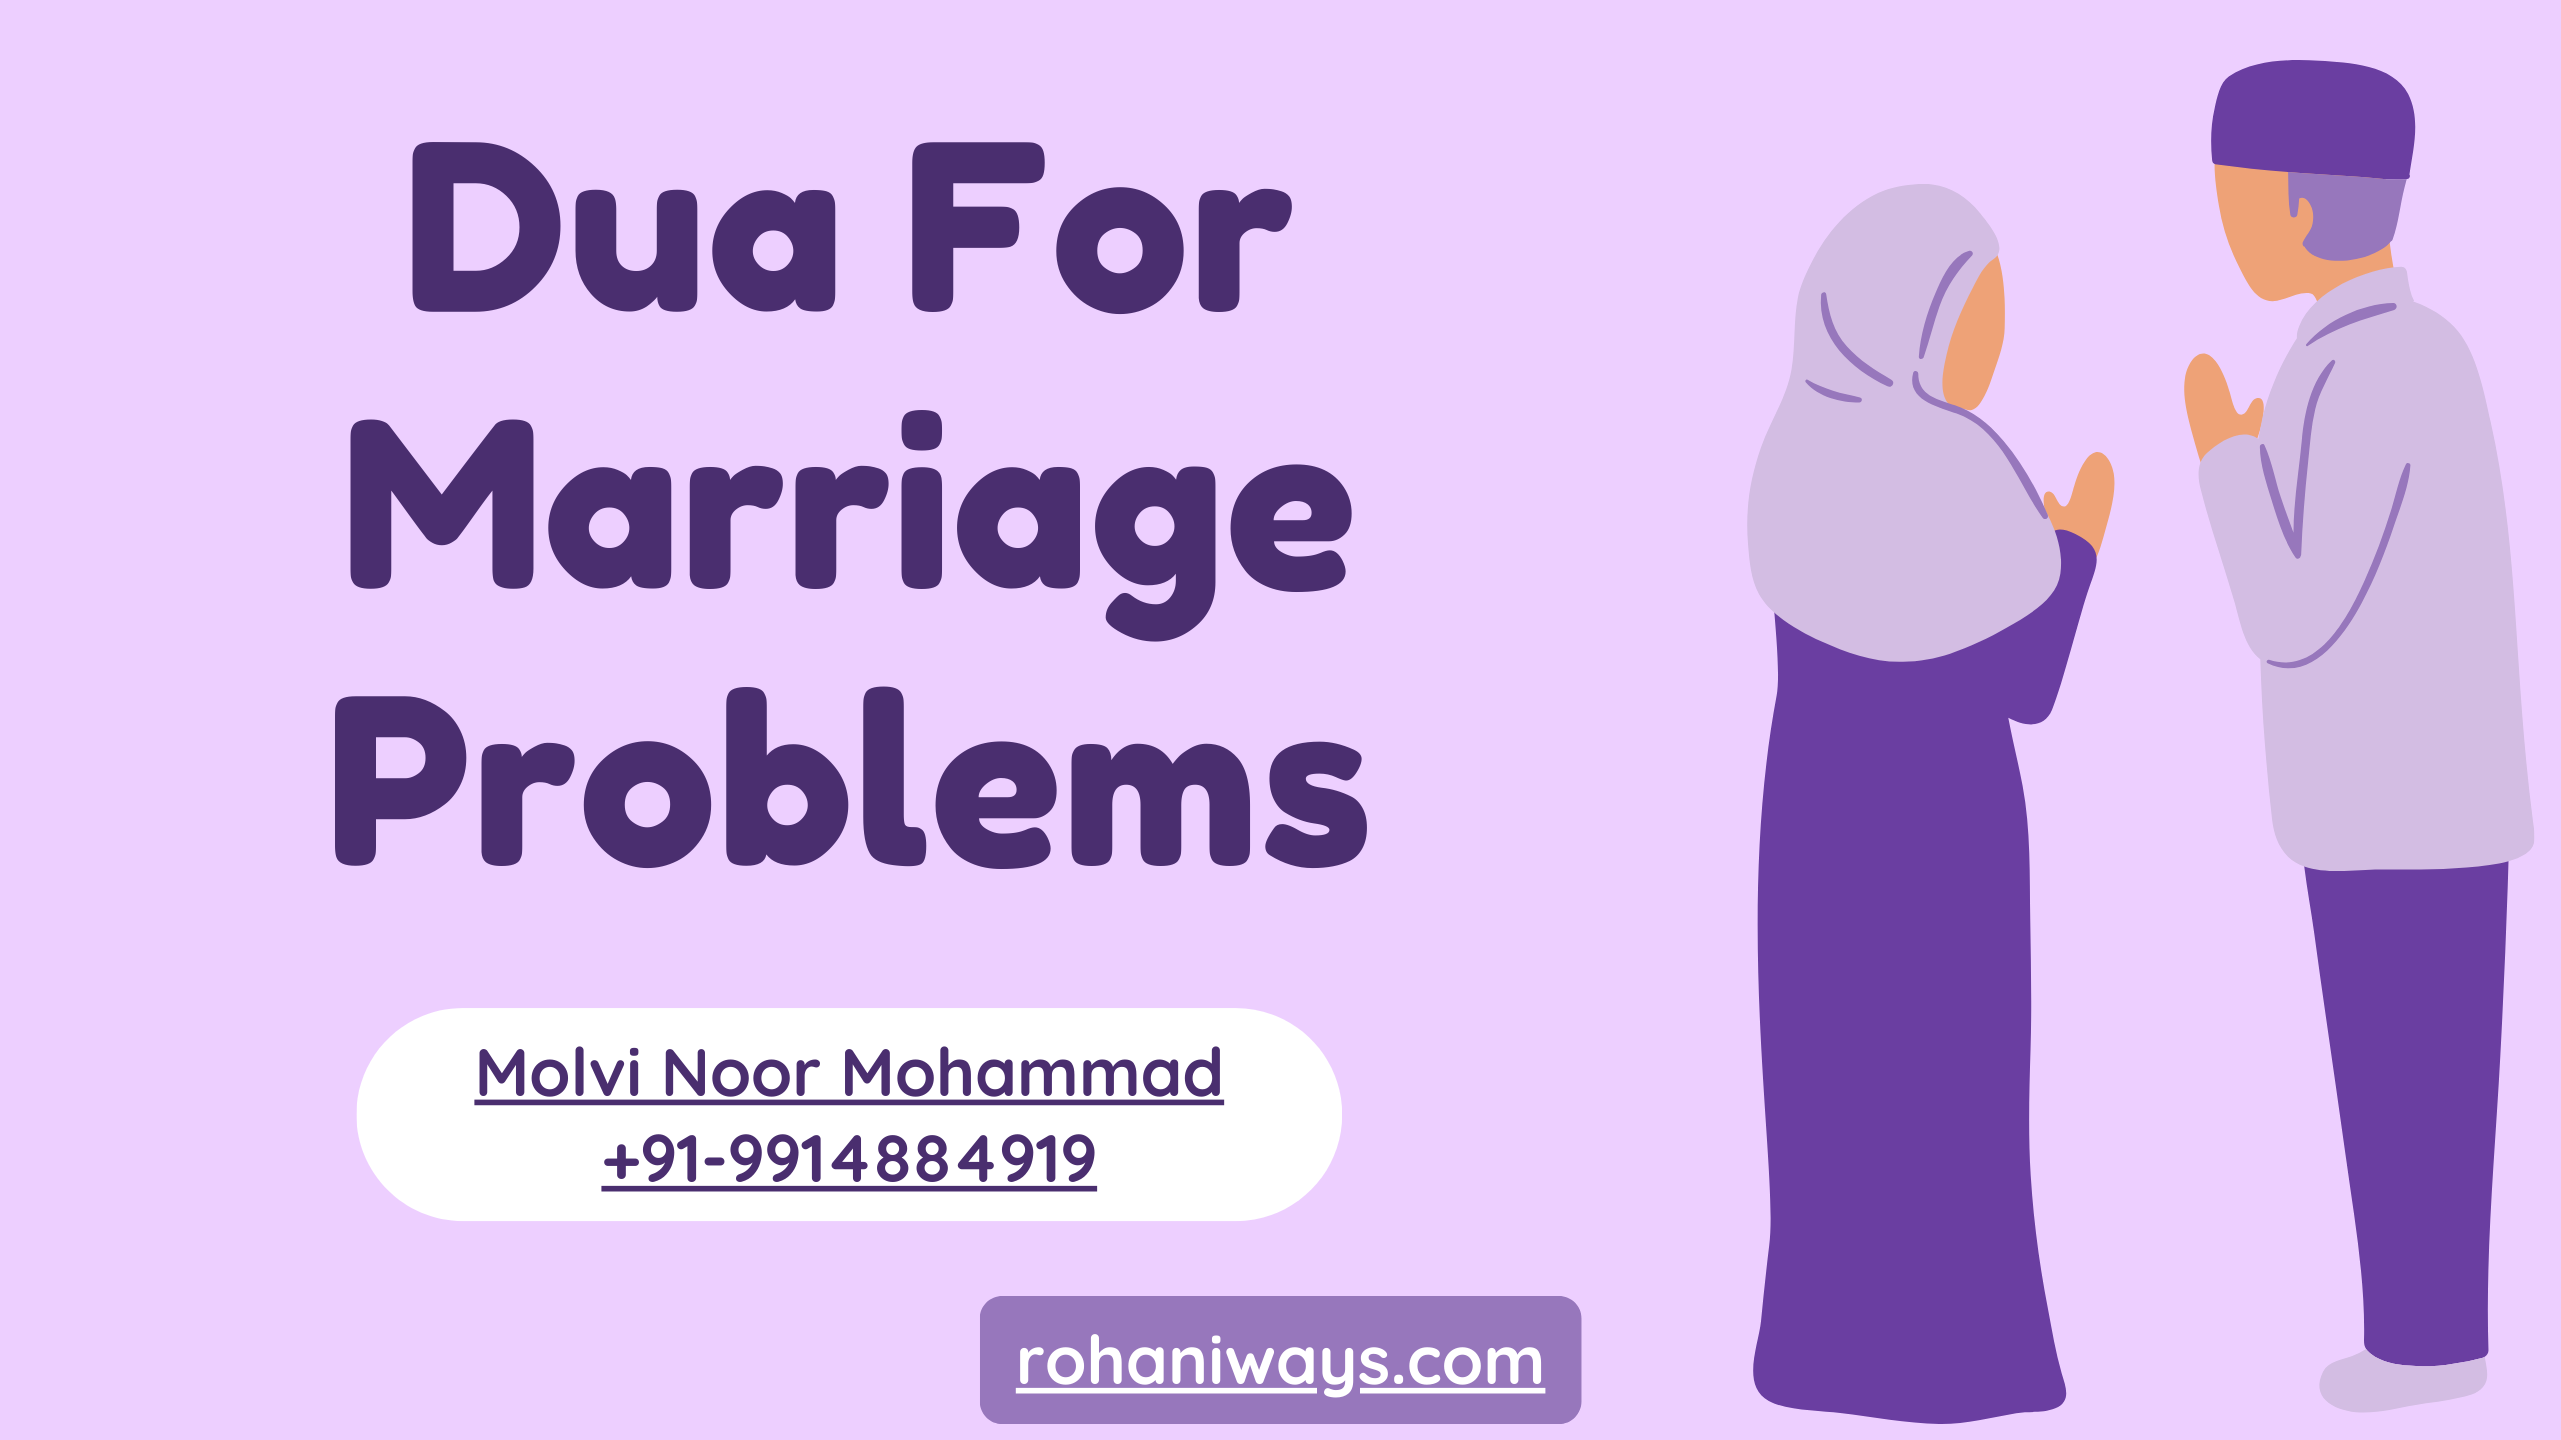 Dua For Marriage problems